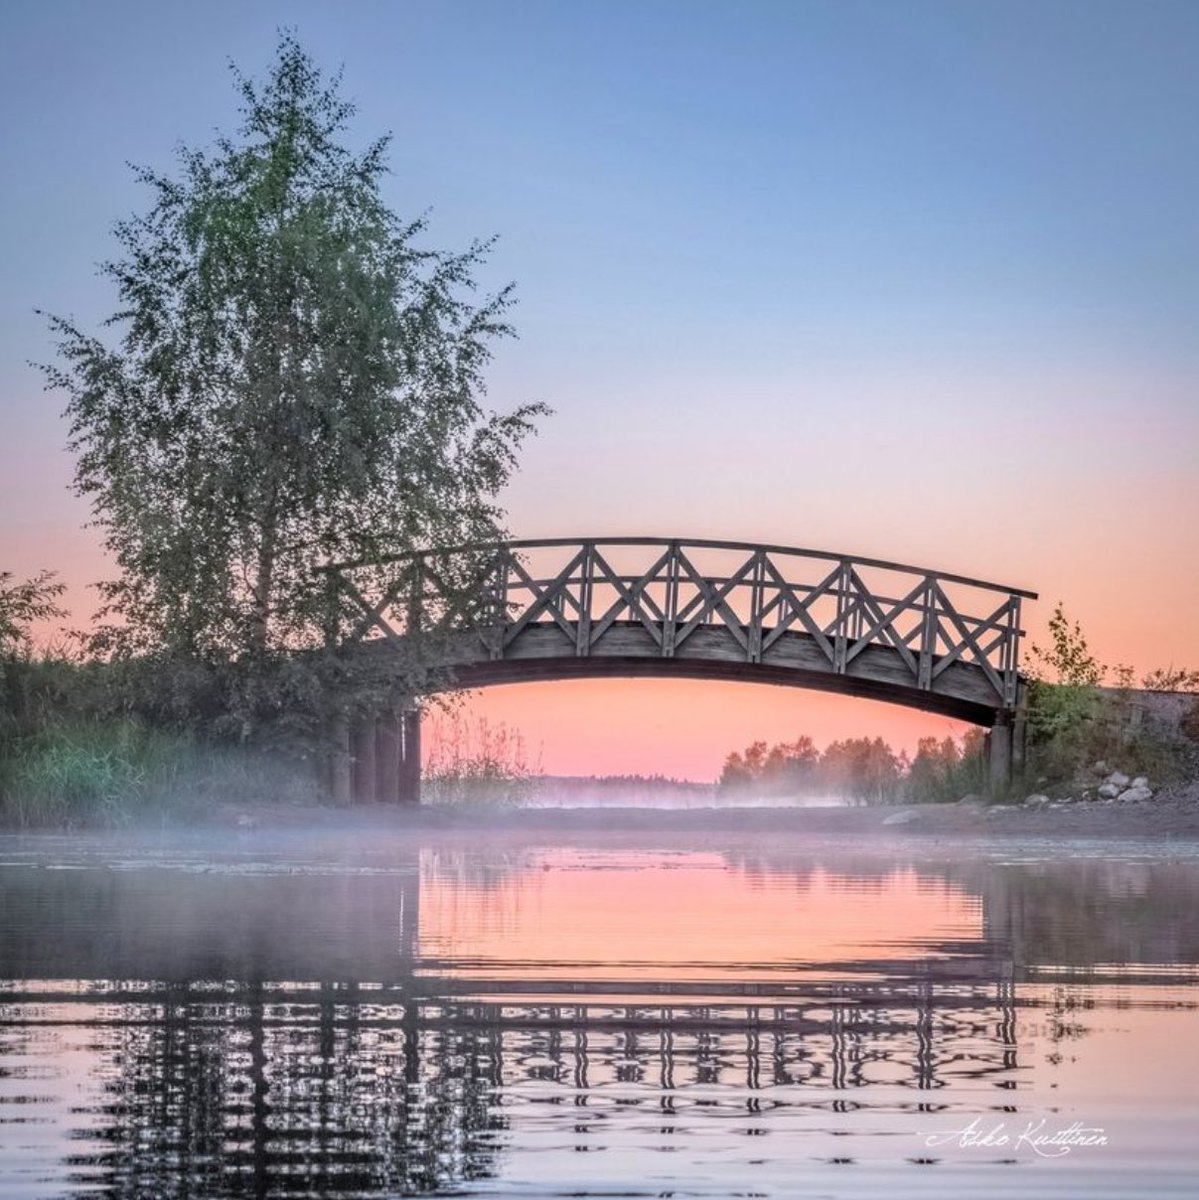 Finland 
📸 @askokuittinen
#finland #travel #photography #naturelovers #X #destinations #scenery #travelphotography